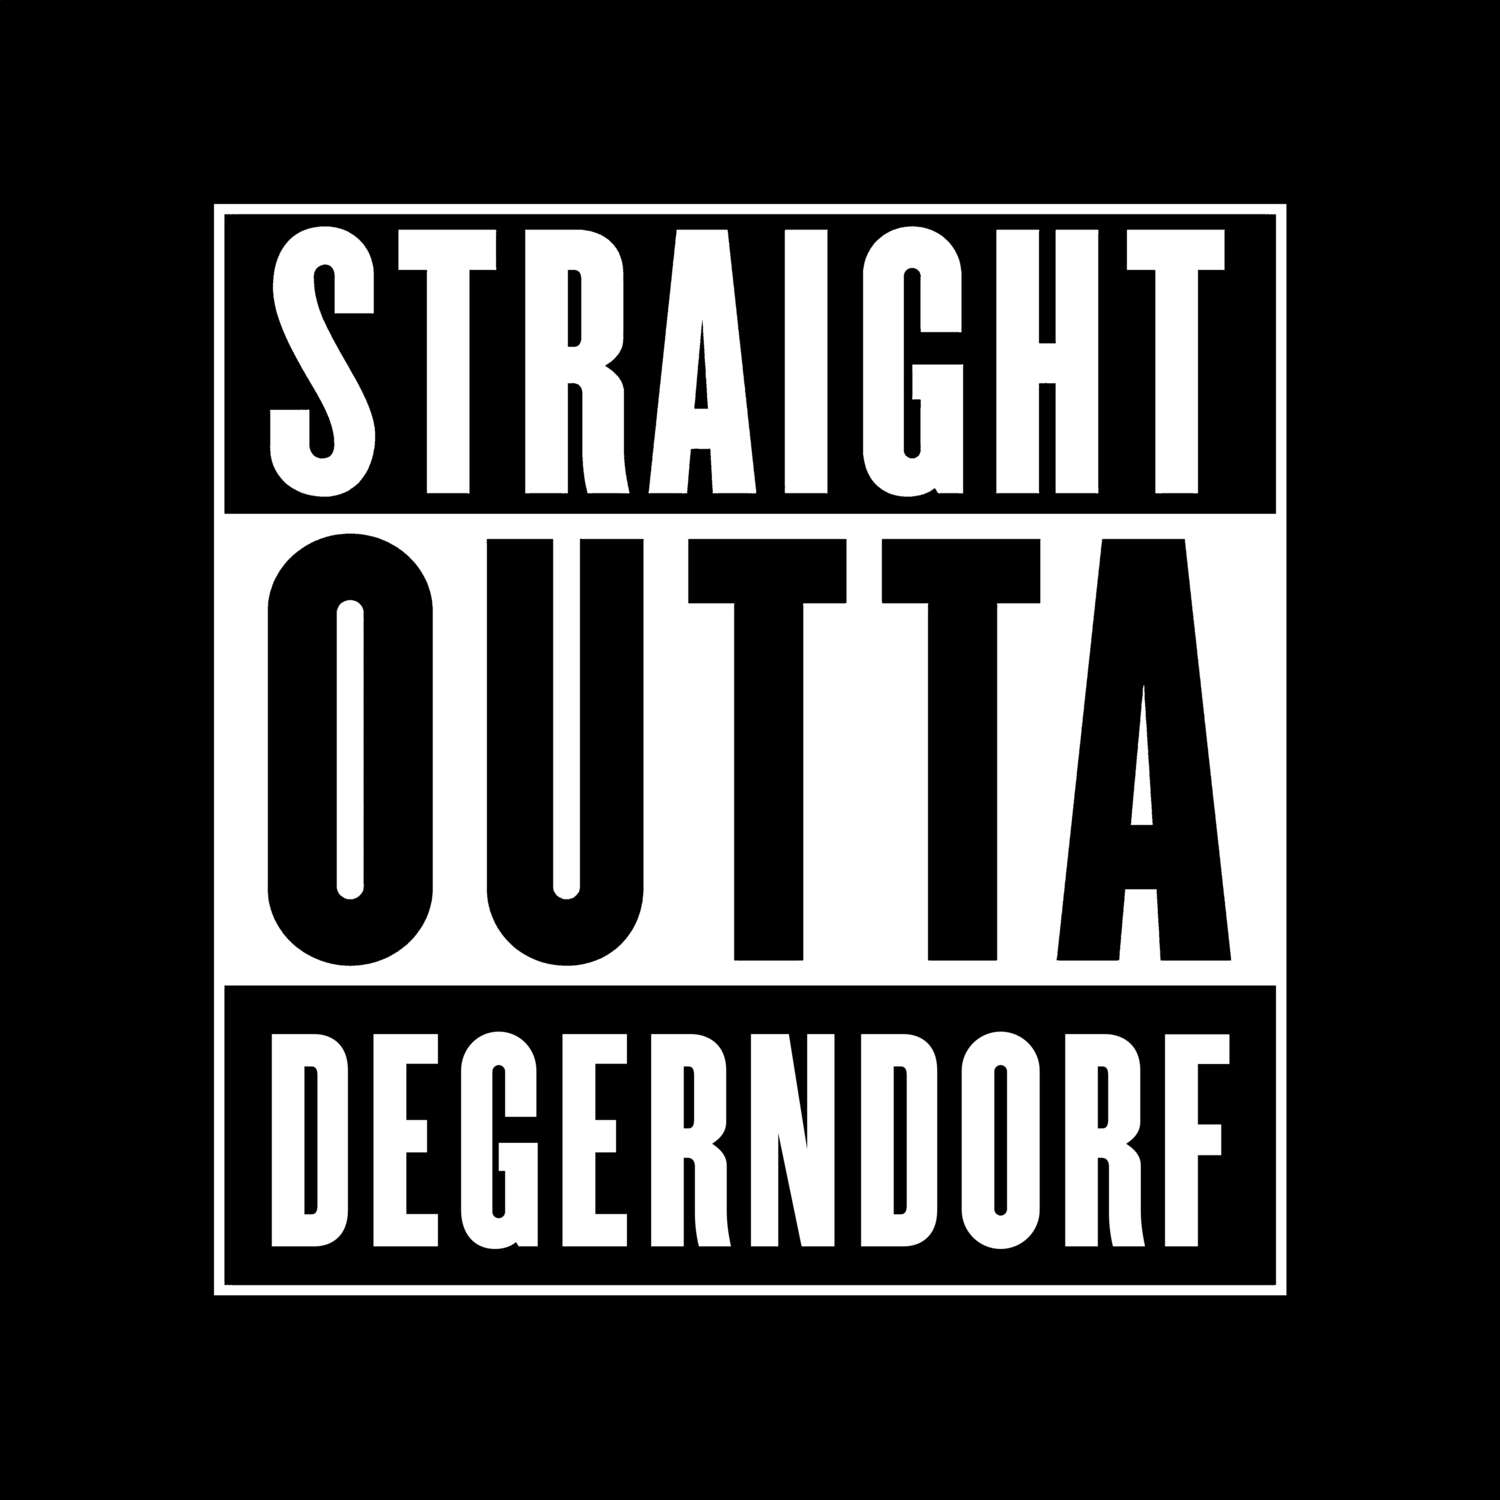 Degerndorf T-Shirt »Straight Outta«